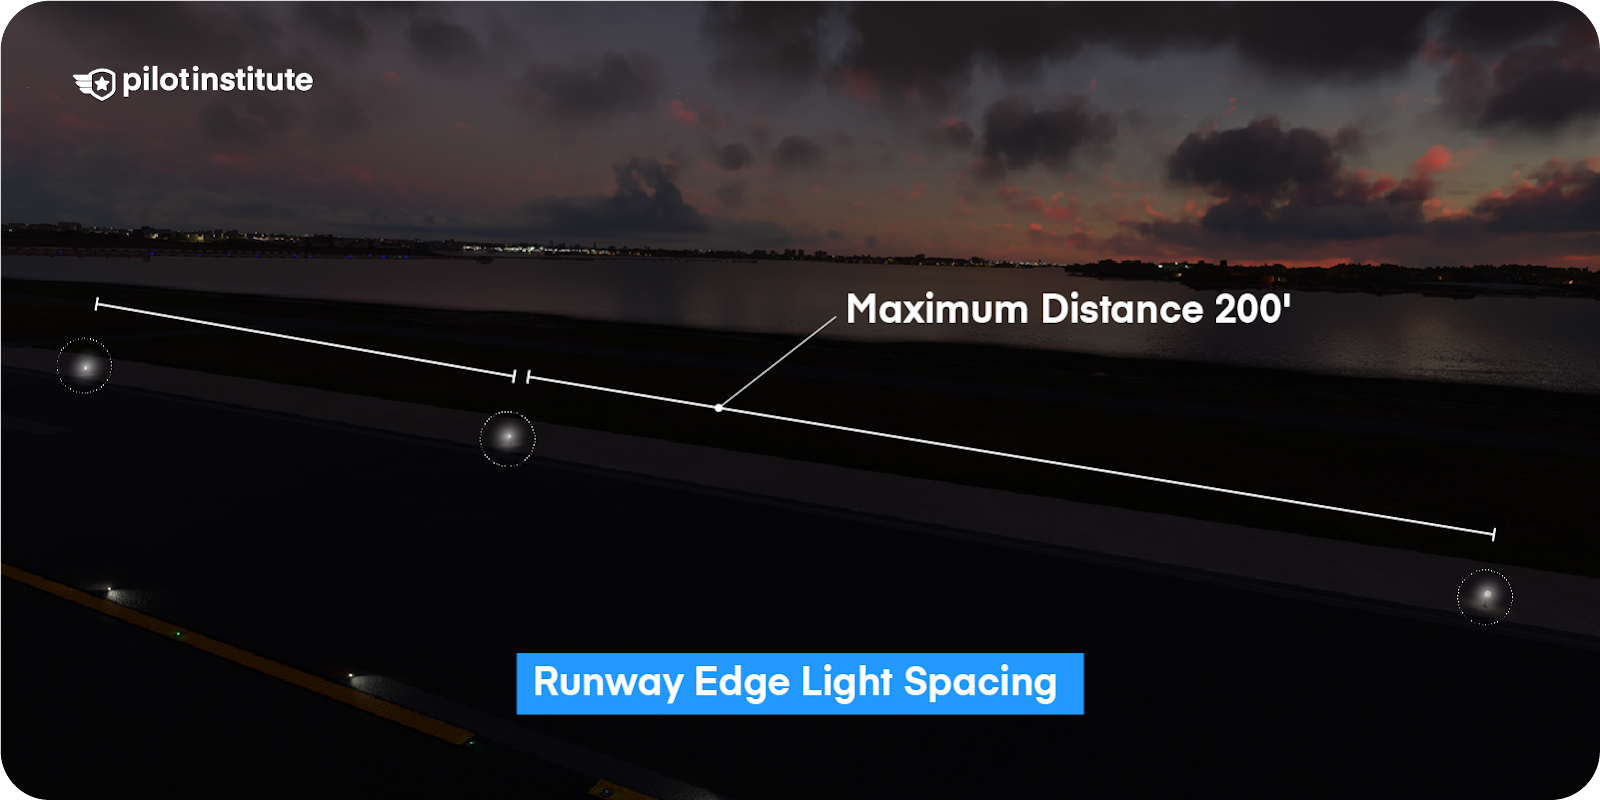 Runway edge lights with maximum spacing of 200 feet.